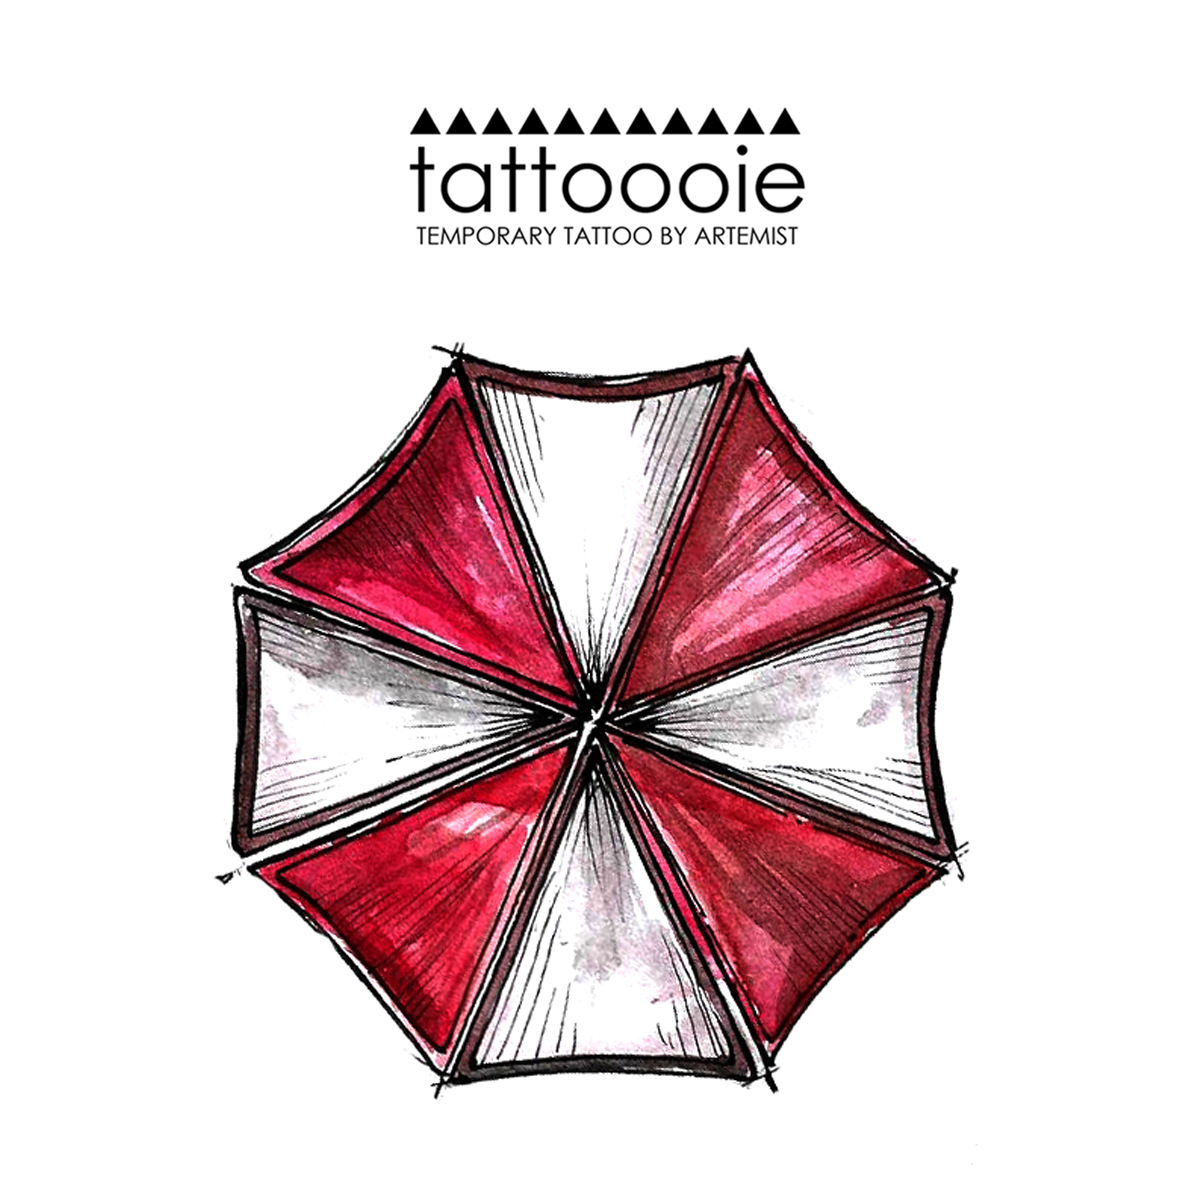 My Umbrella Corporation Tattoo by CocoDeathMetaller on DeviantArt